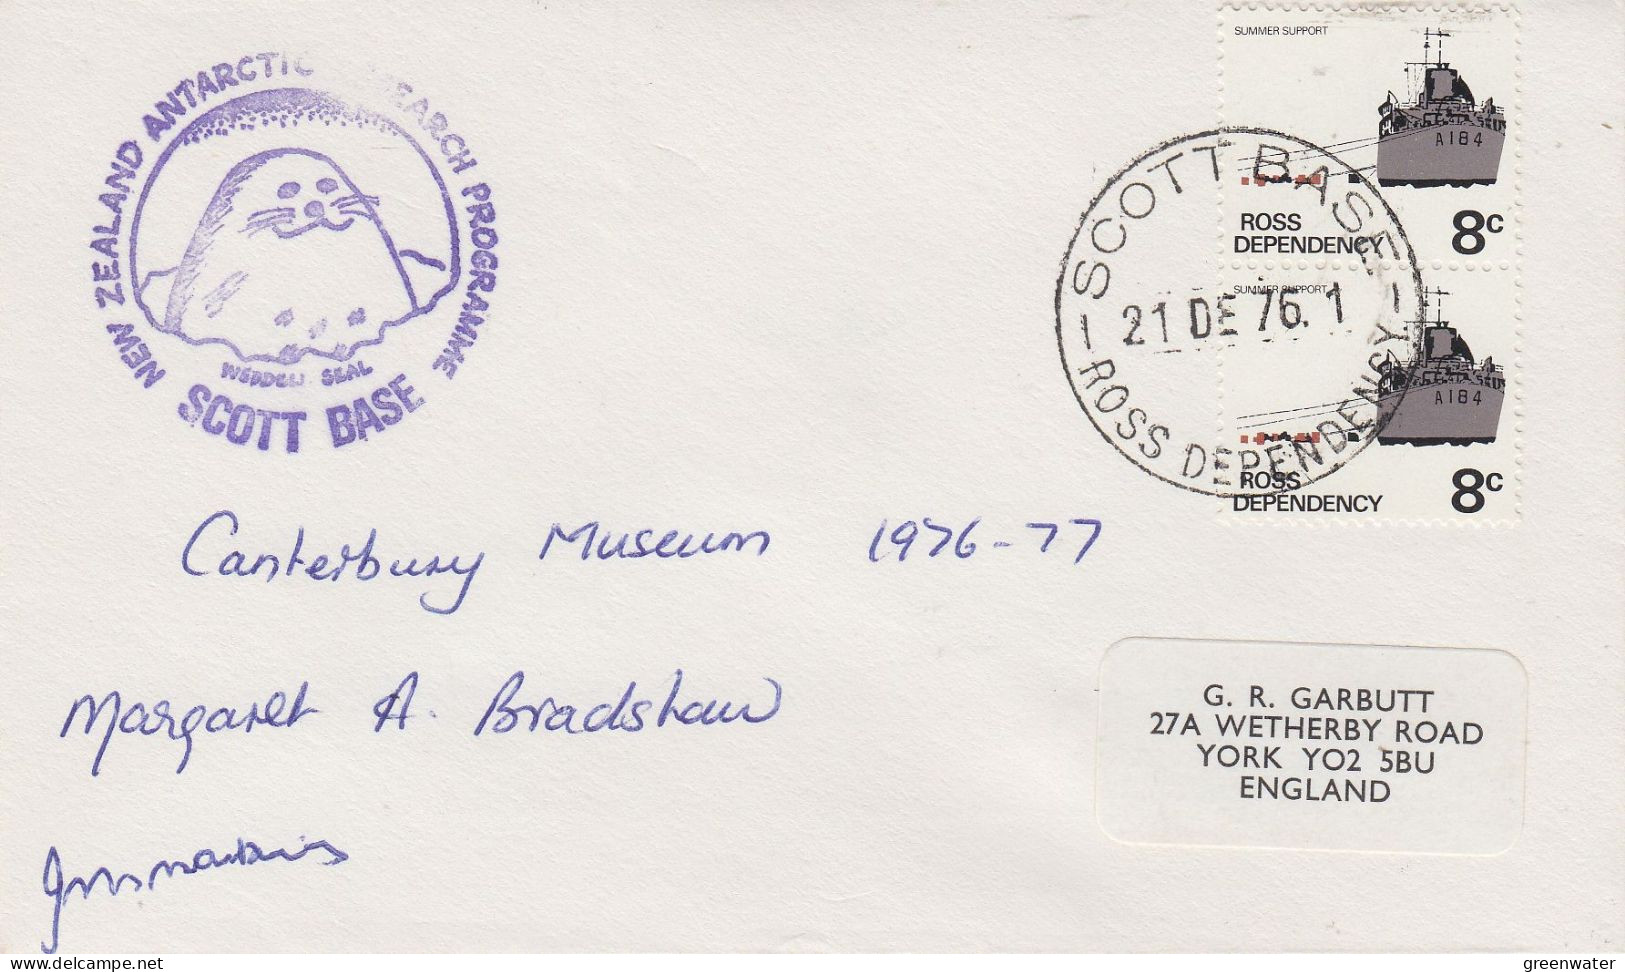 Ross Dependency  Ca NZ Antarctic Research  Canterbury Museum 2 Signatures Ca Scott Base 21 DE 1976 (ZO231) - Basi Scientifiche